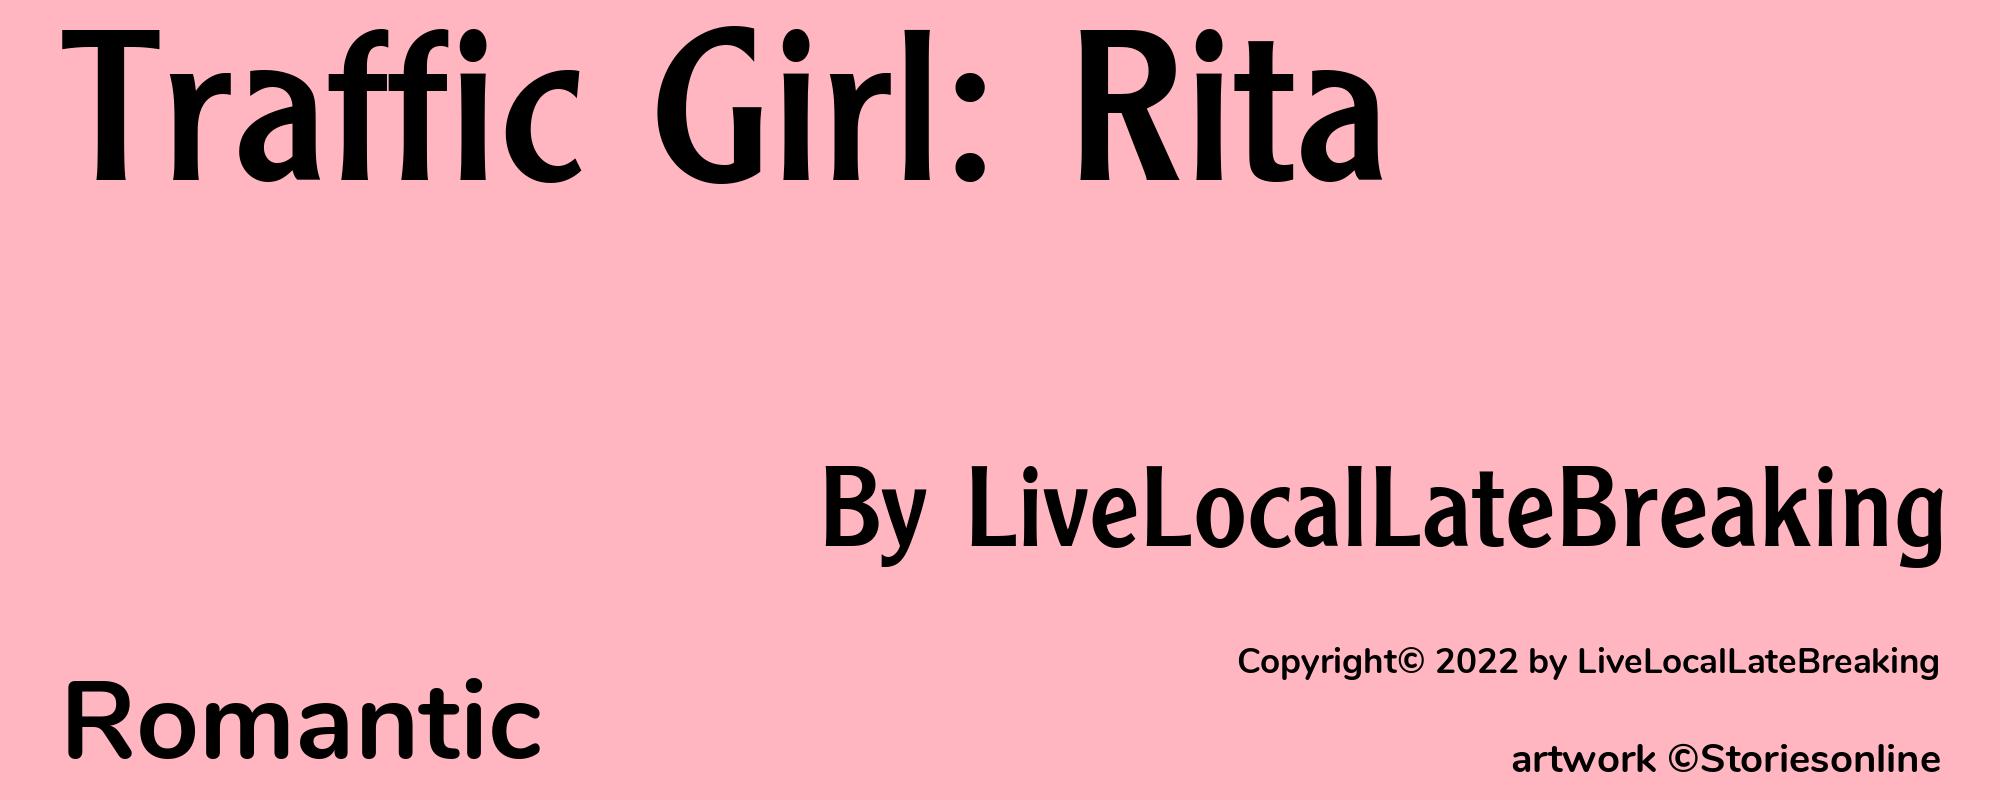 Traffic Girl: Rita - Cover